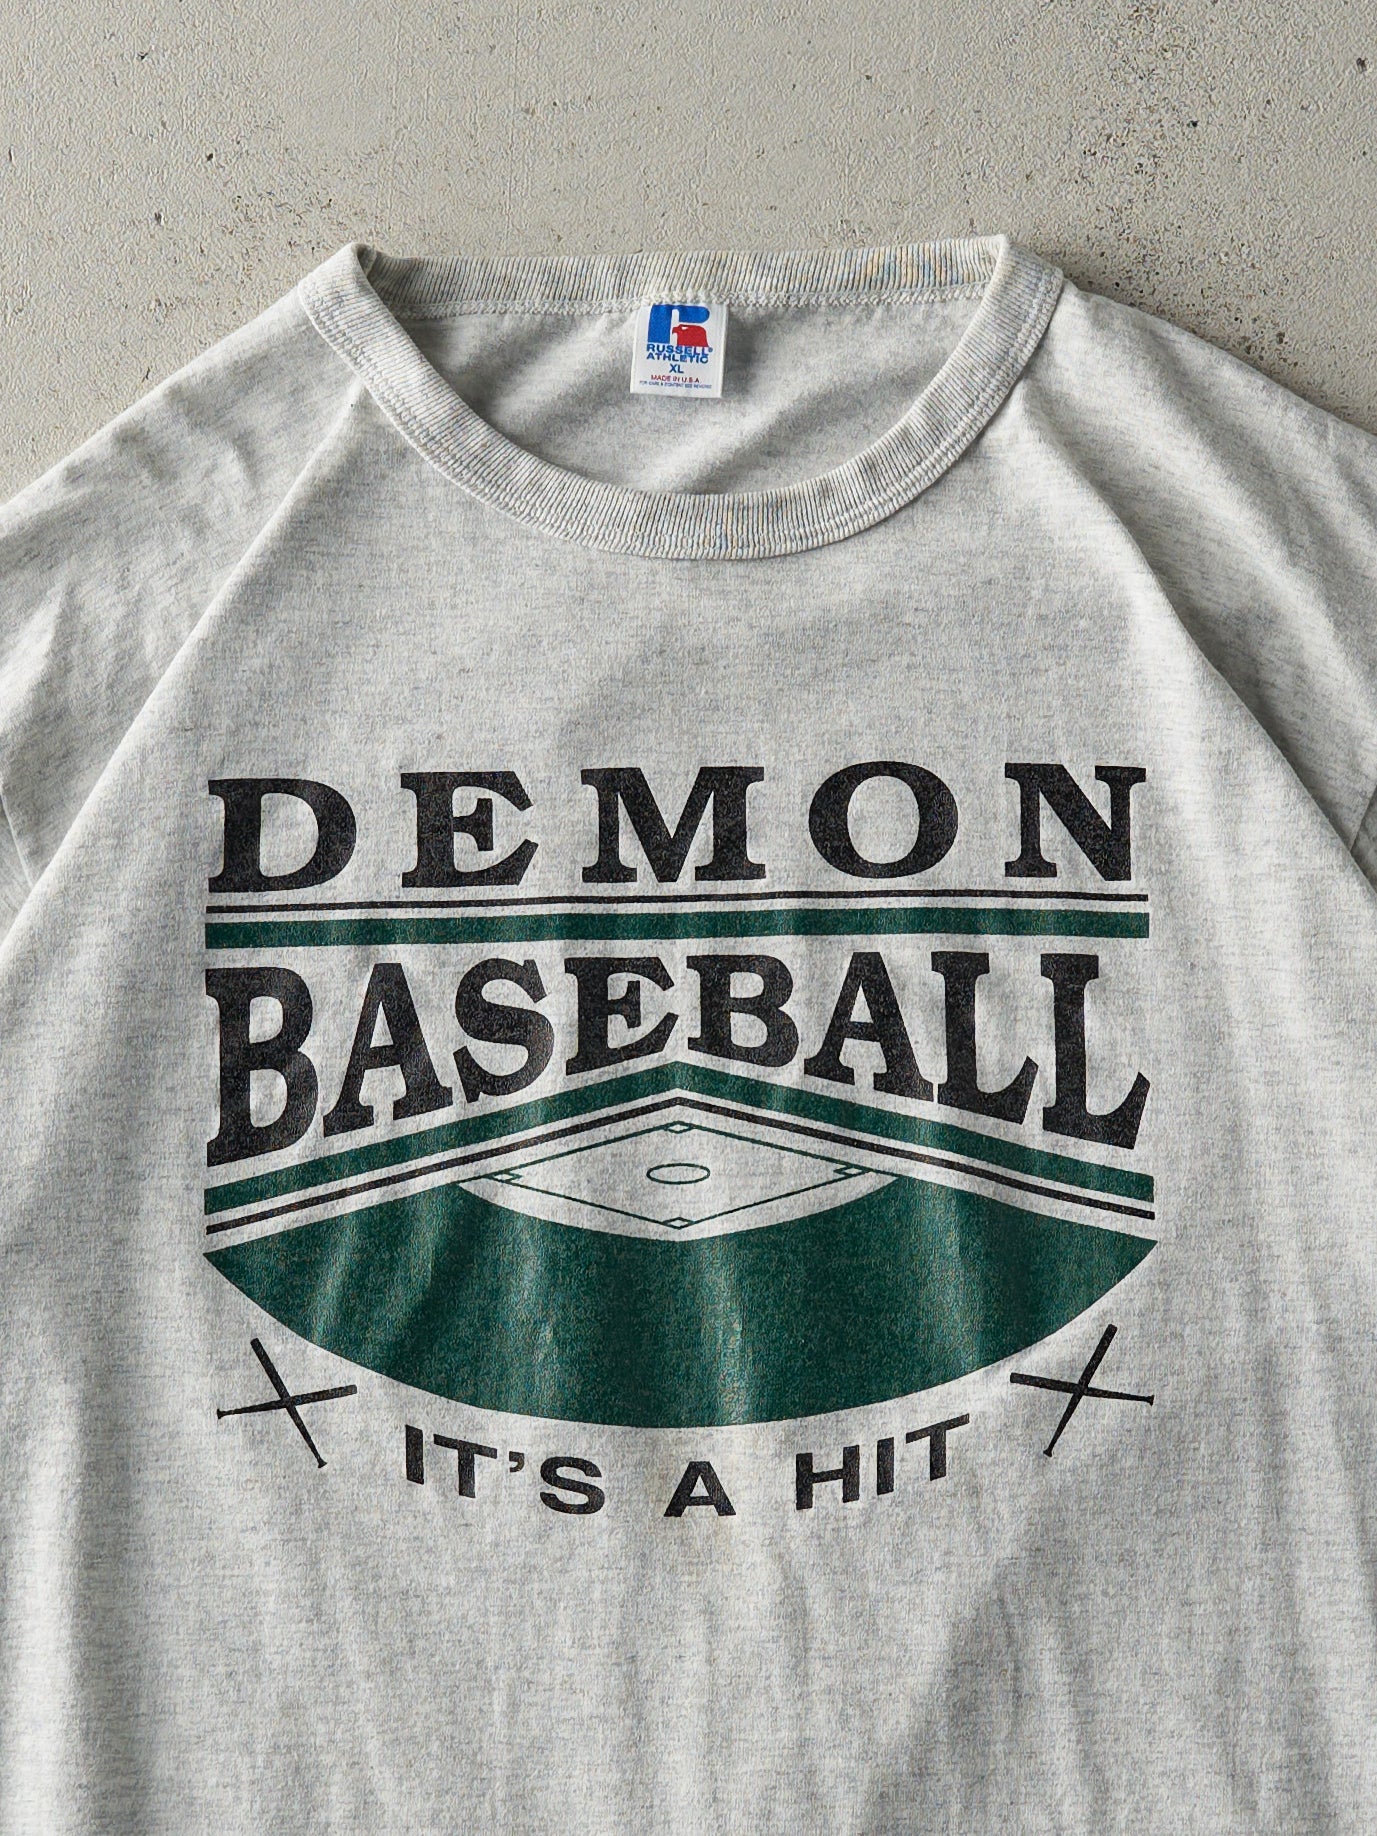 Vintage 90s Heather Grey Demon Baseball Russell Athletic Tee (L)